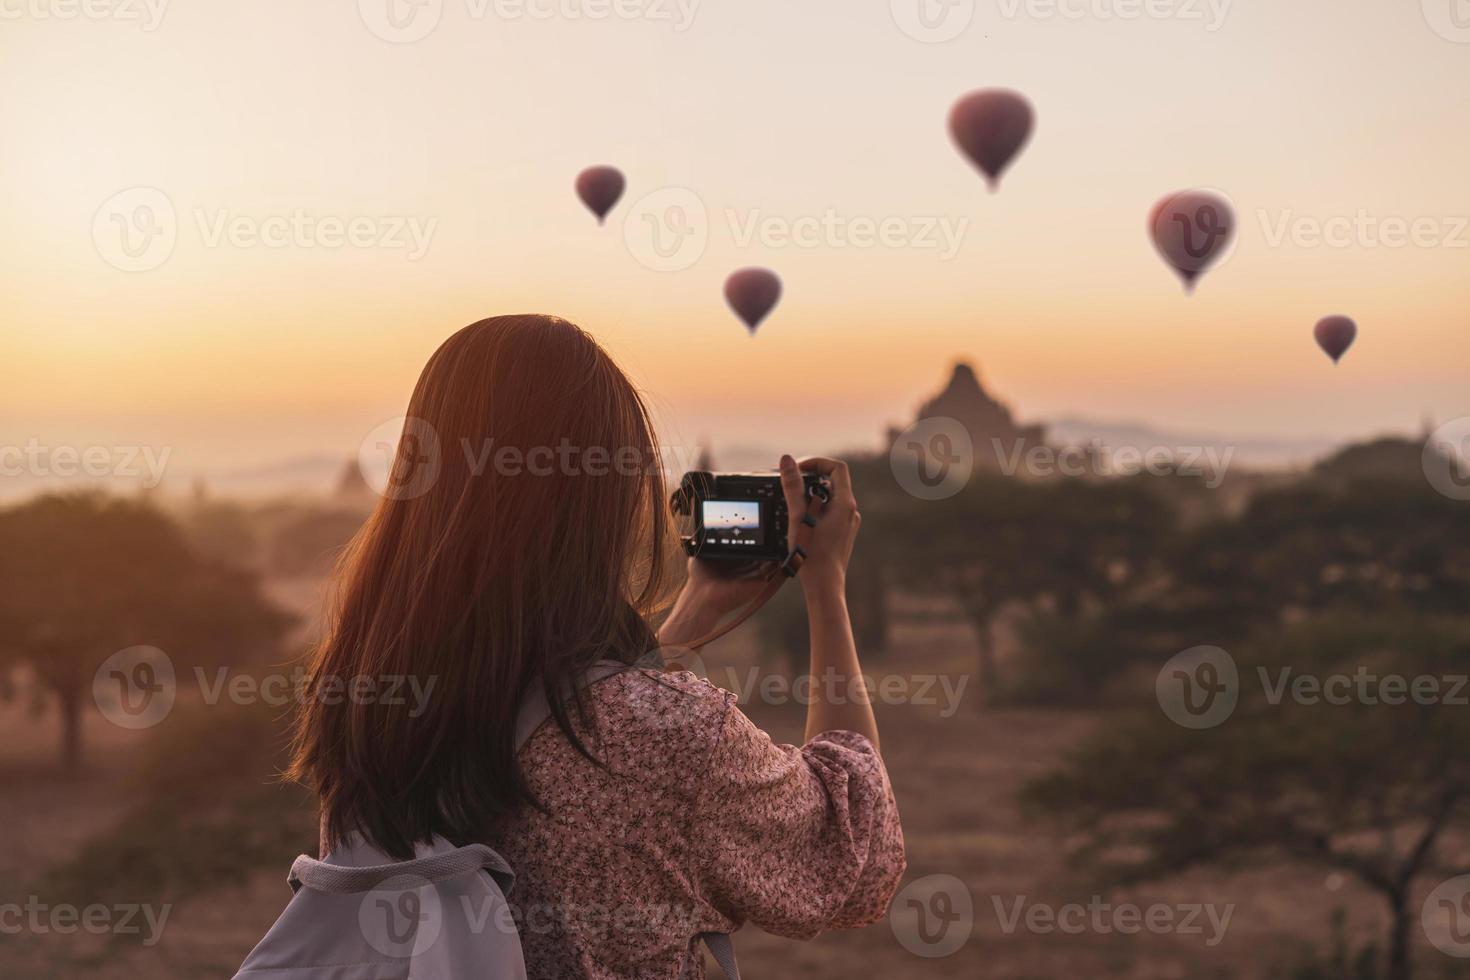 ung kvinna resande njuter med ballonger över gammal pagod på bagan, myanmar på soluppgång foto